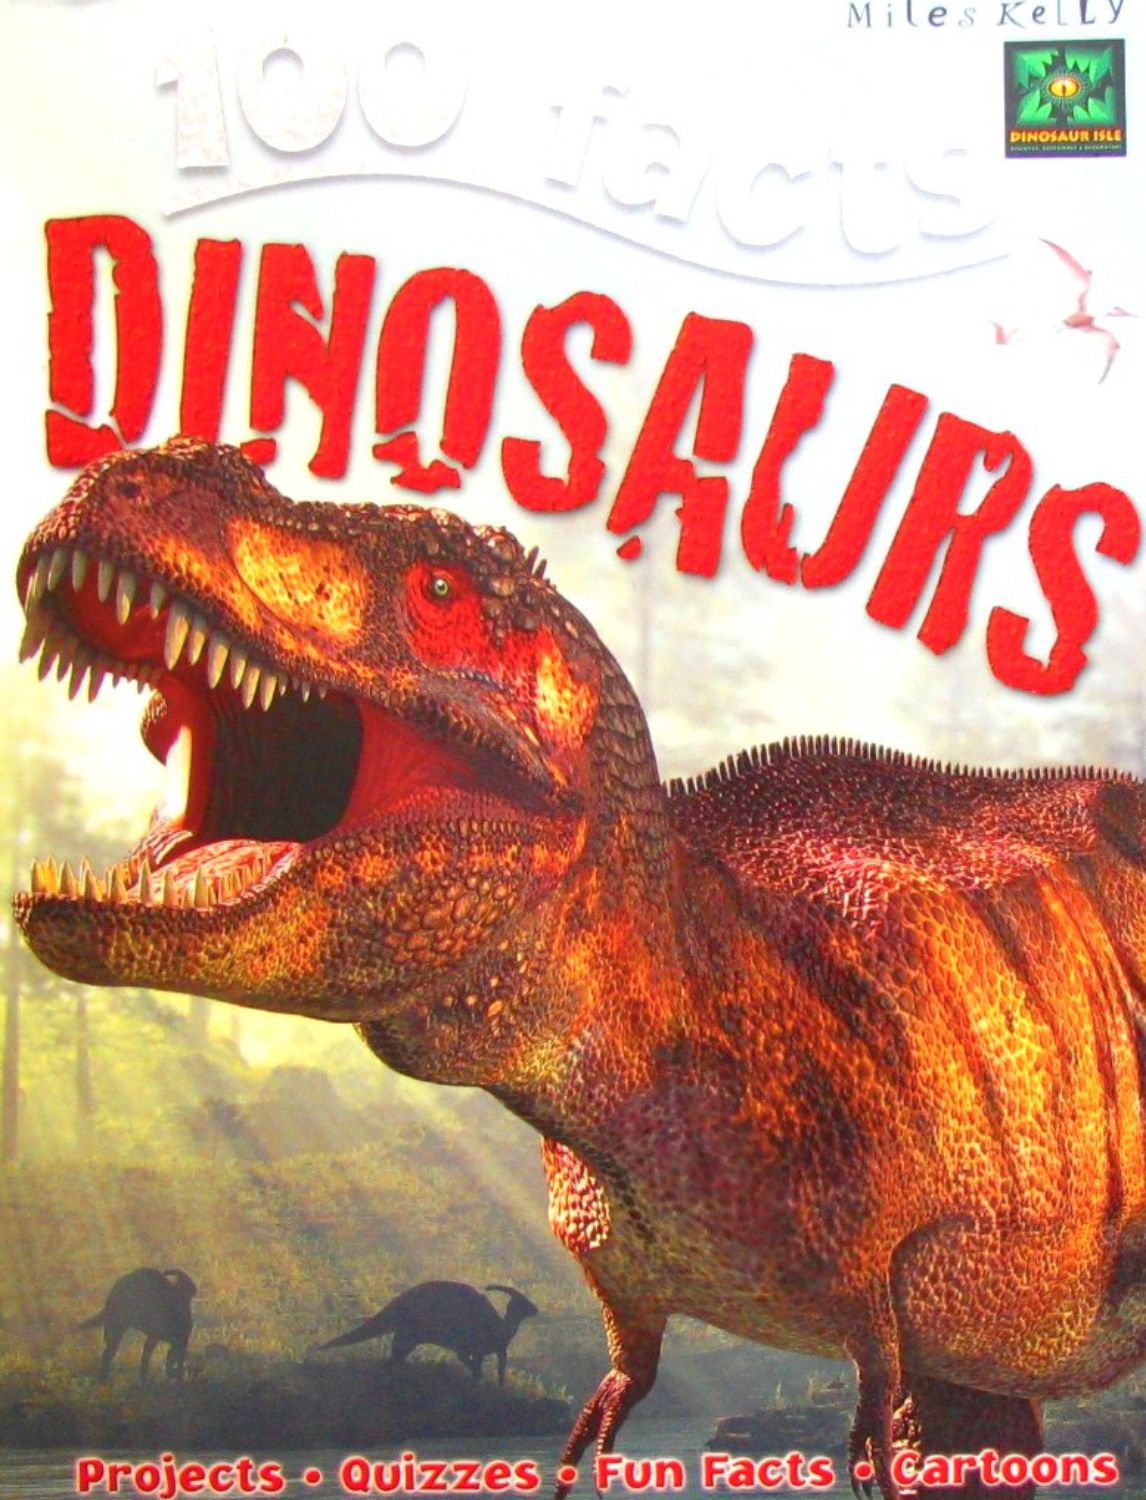 1000 facts of dinosaurs steve parker